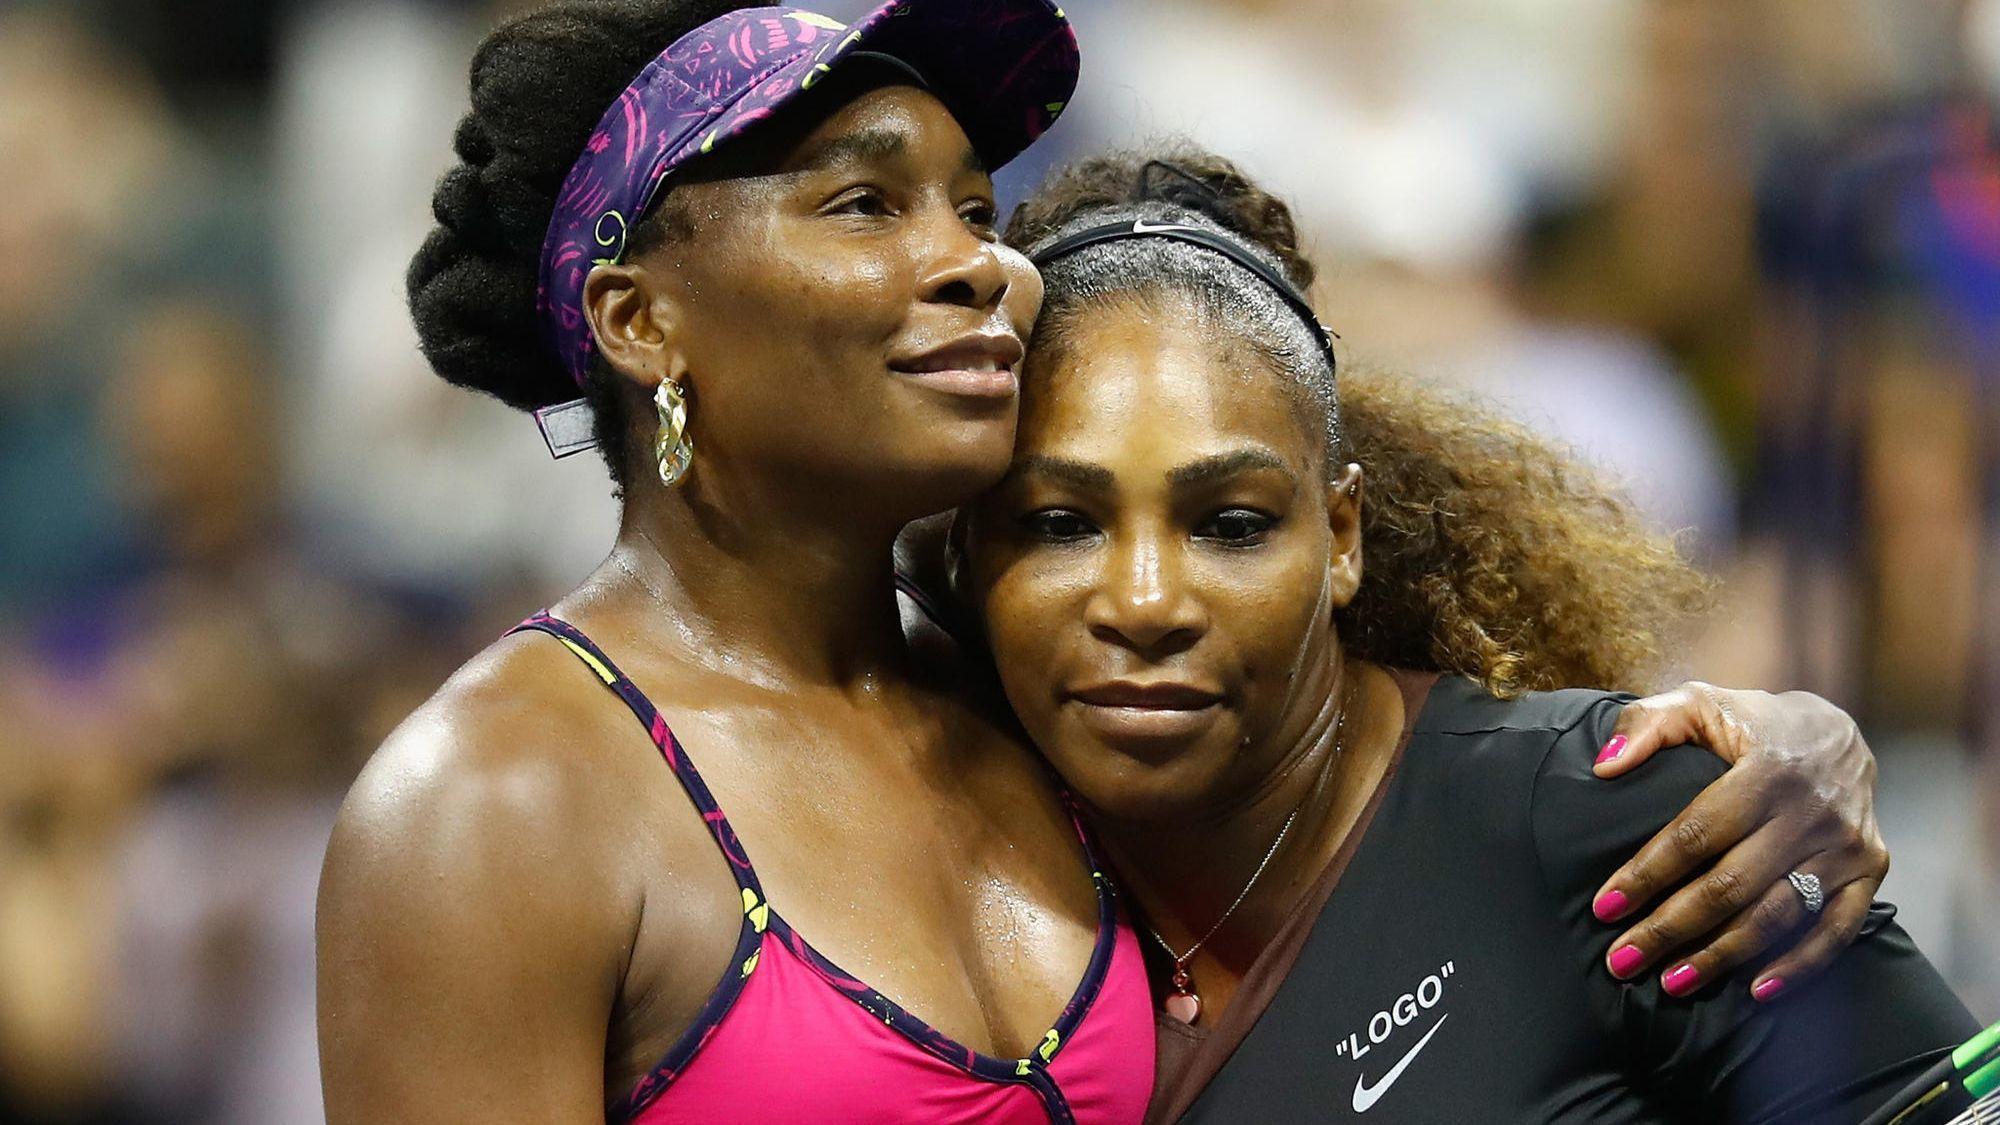 Venus and Serena Williams help inspire diversity in tennis - Chicago Tribune2000 x 1125